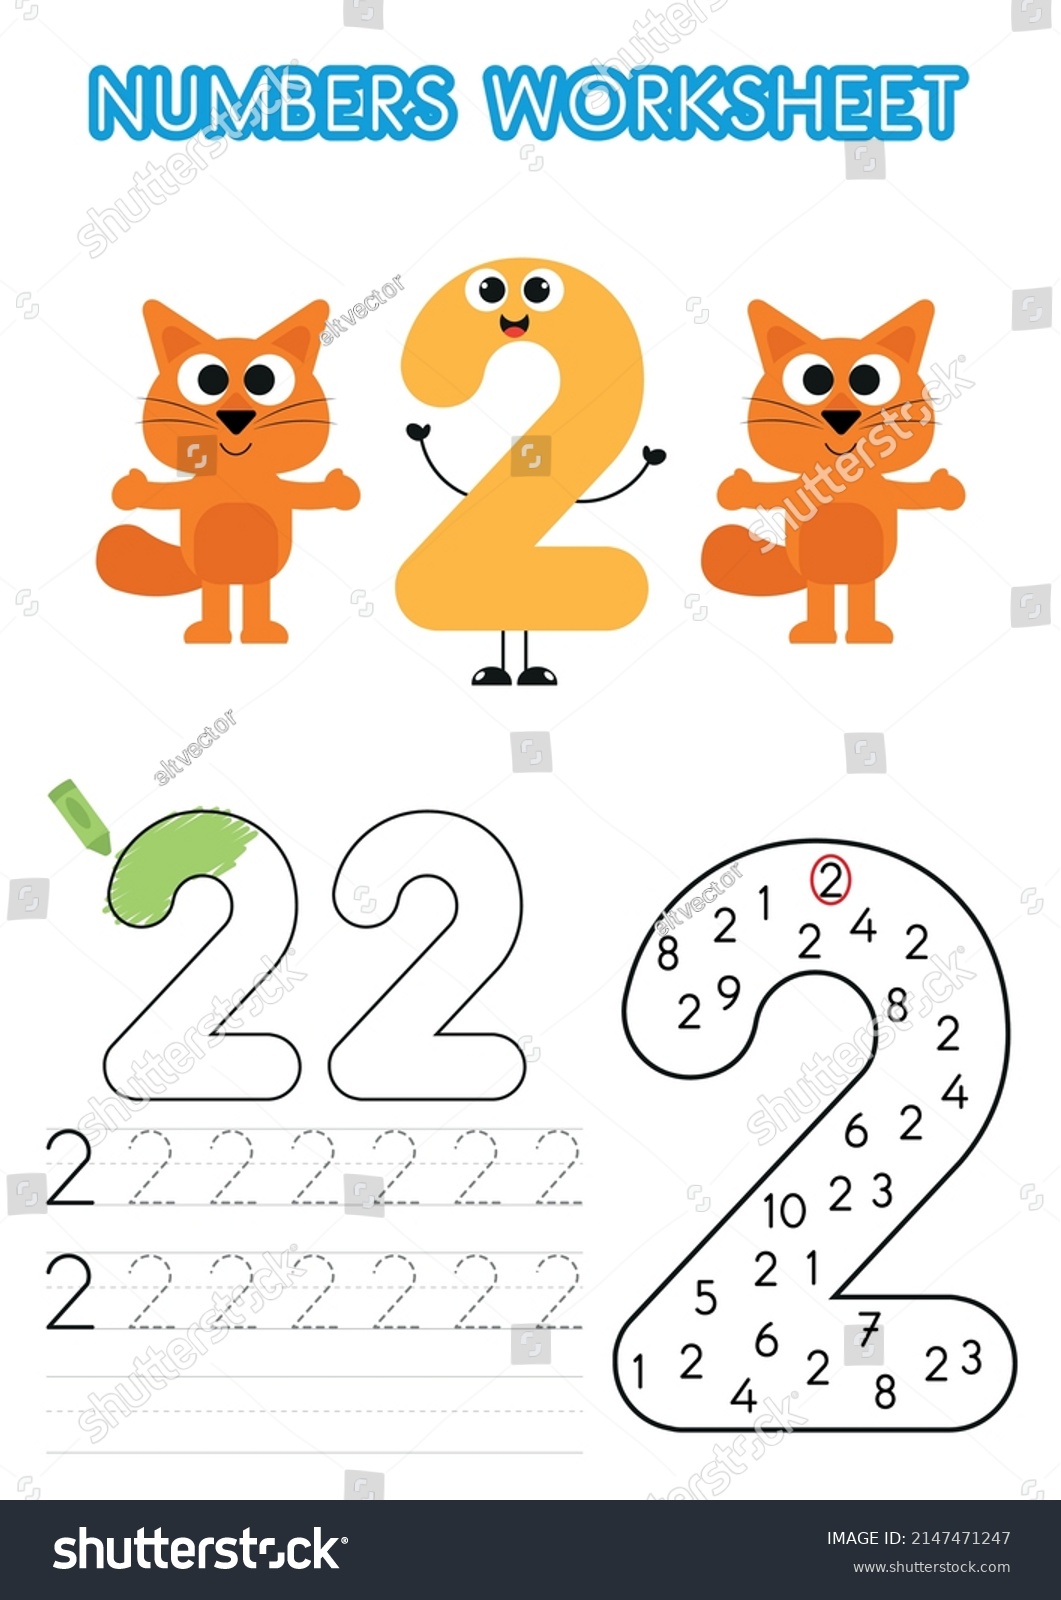 numbers-worksheet-preschoolers-number-tracking-activity-stock-vector-royalty-free-2147471247